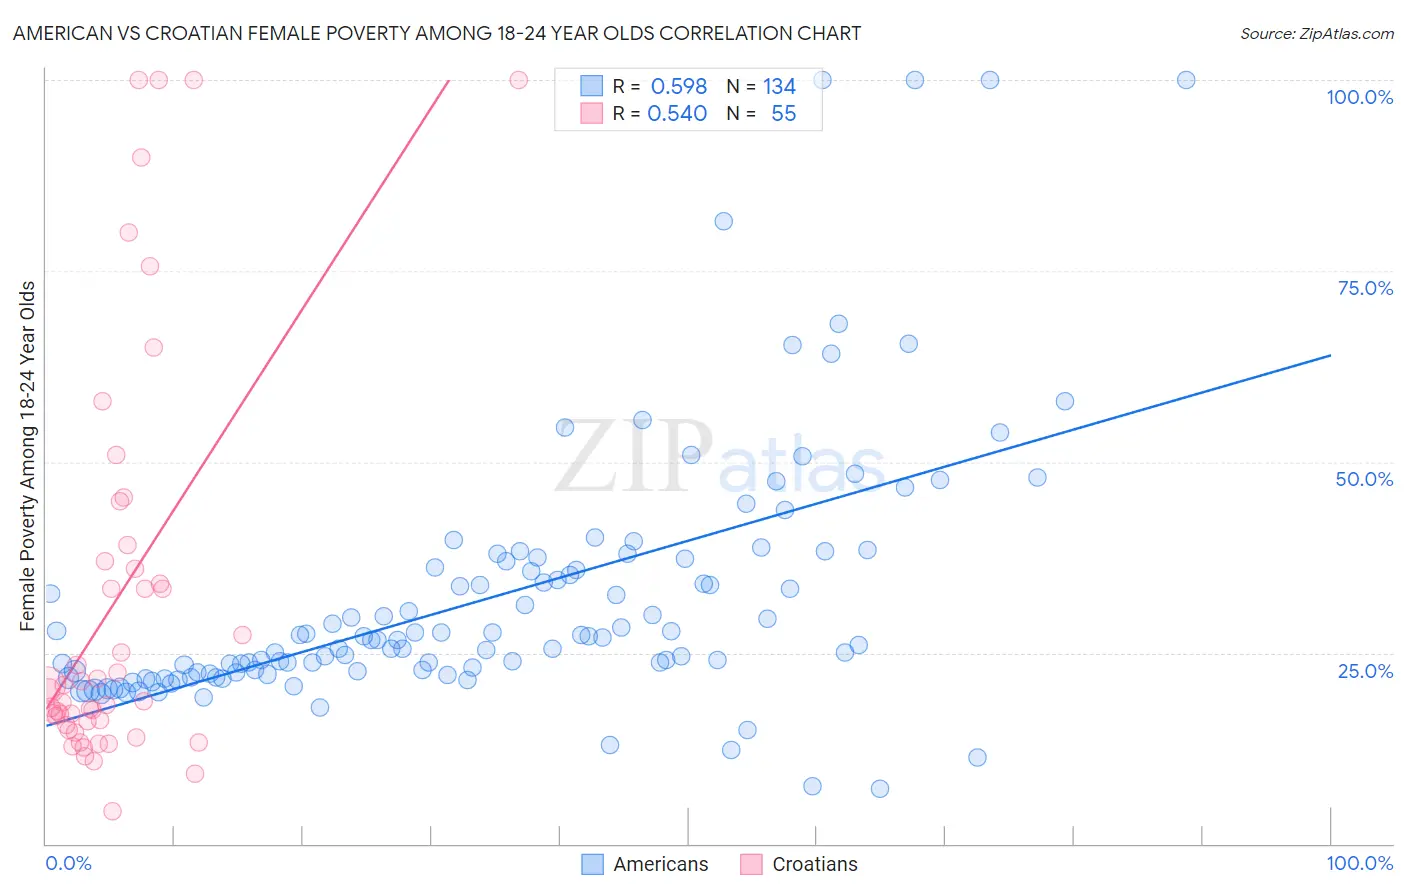 American vs Croatian Female Poverty Among 18-24 Year Olds